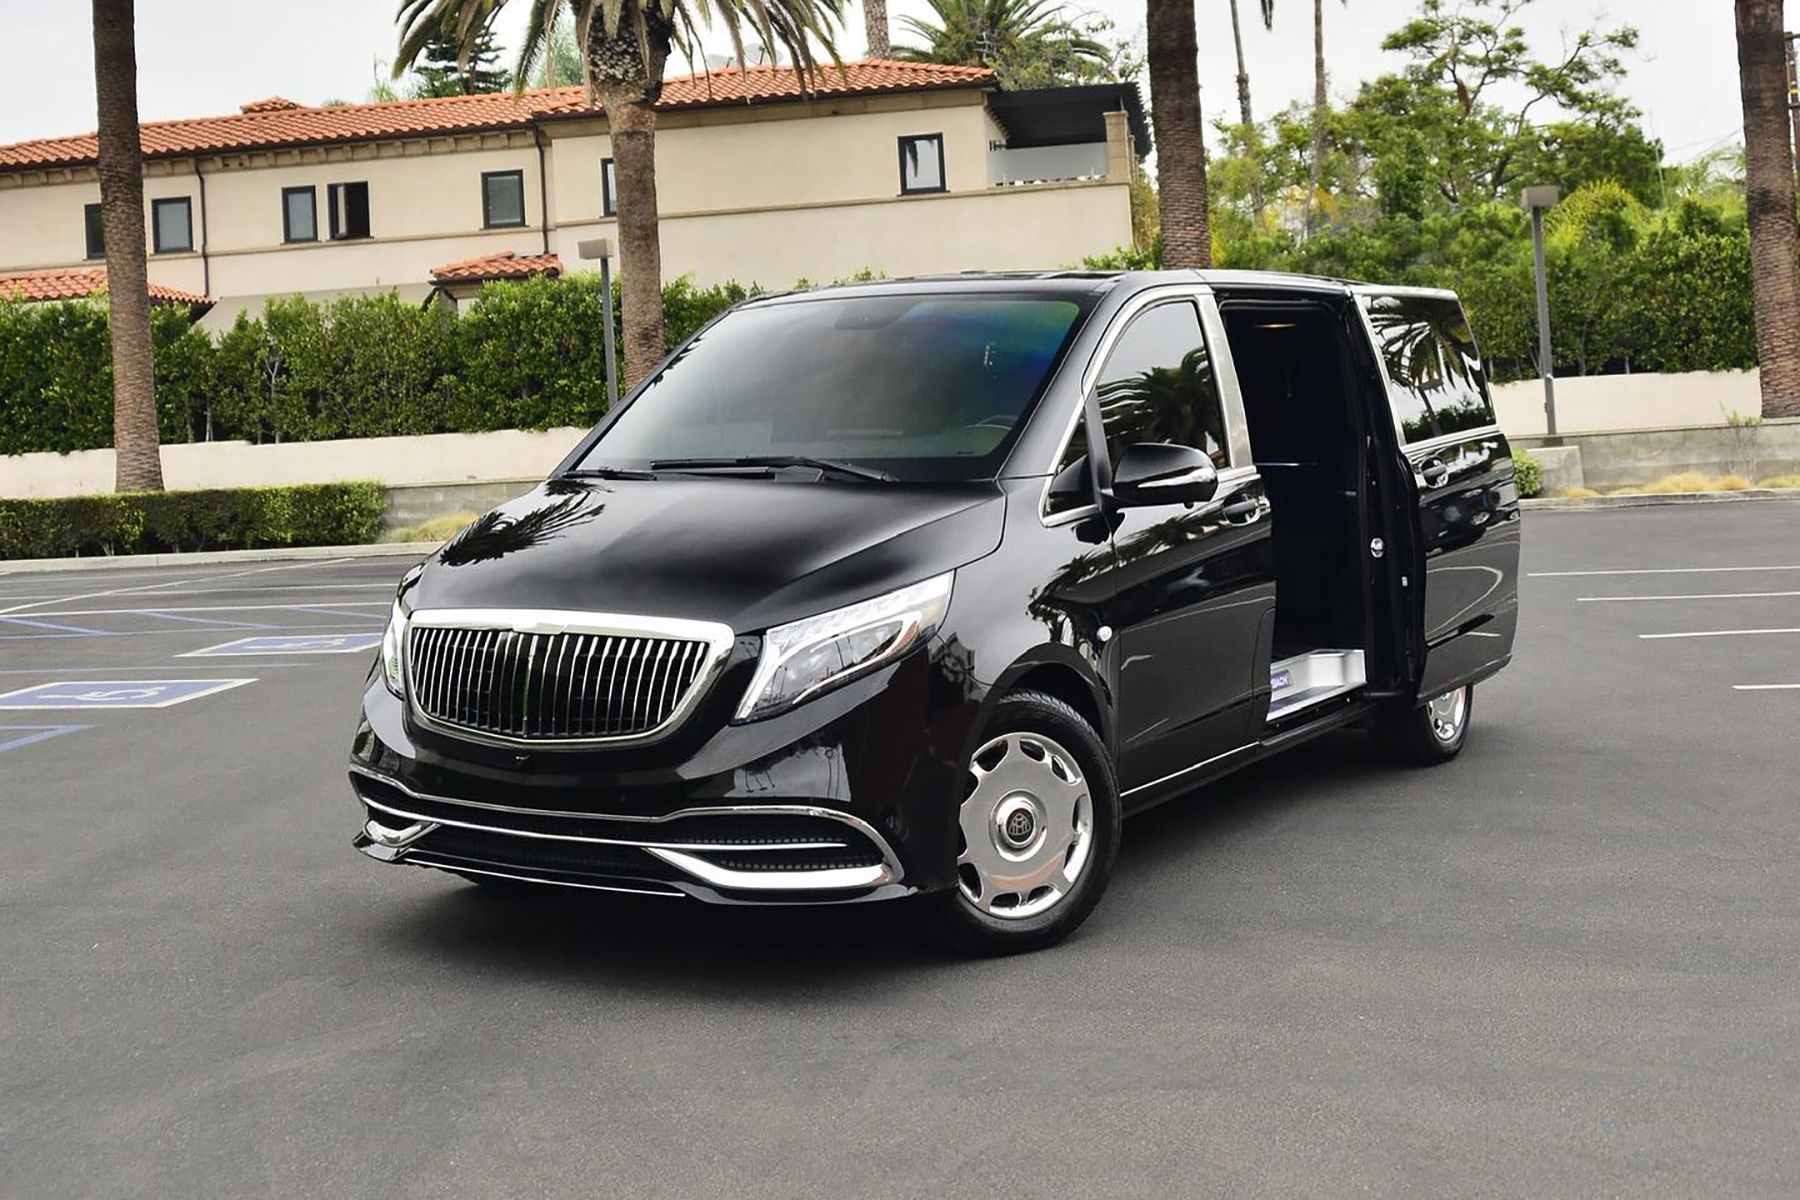 Kanye West spotted driving US$400,000 Mercedes dad-van